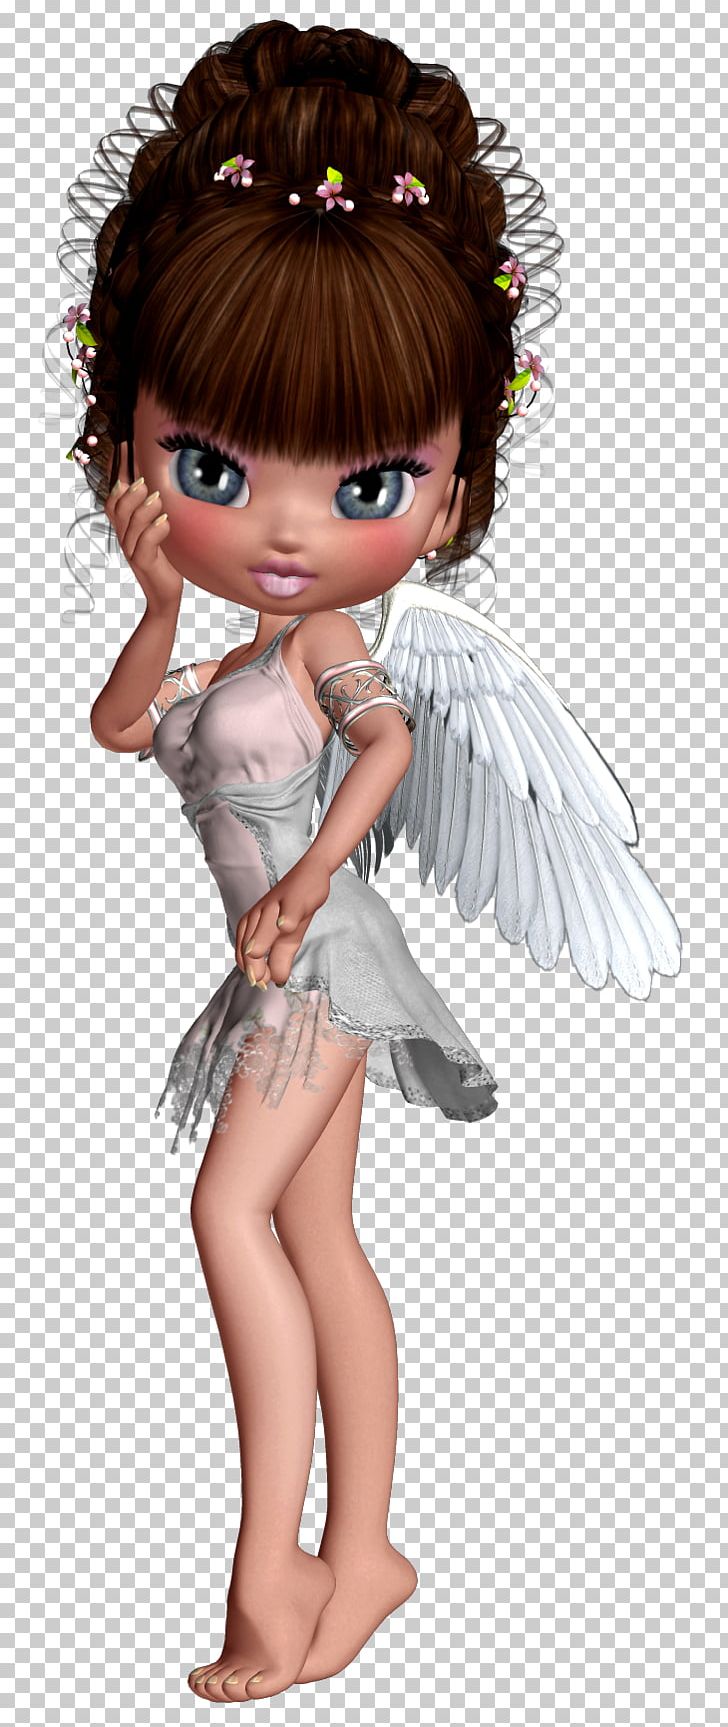 3D Computer Graphics Cartoon Angel Animation 3D Modeling PNG, Clipart, 3d Computer Graphics, 3d Modeling, Angel, Angels, Animation Free PNG Download